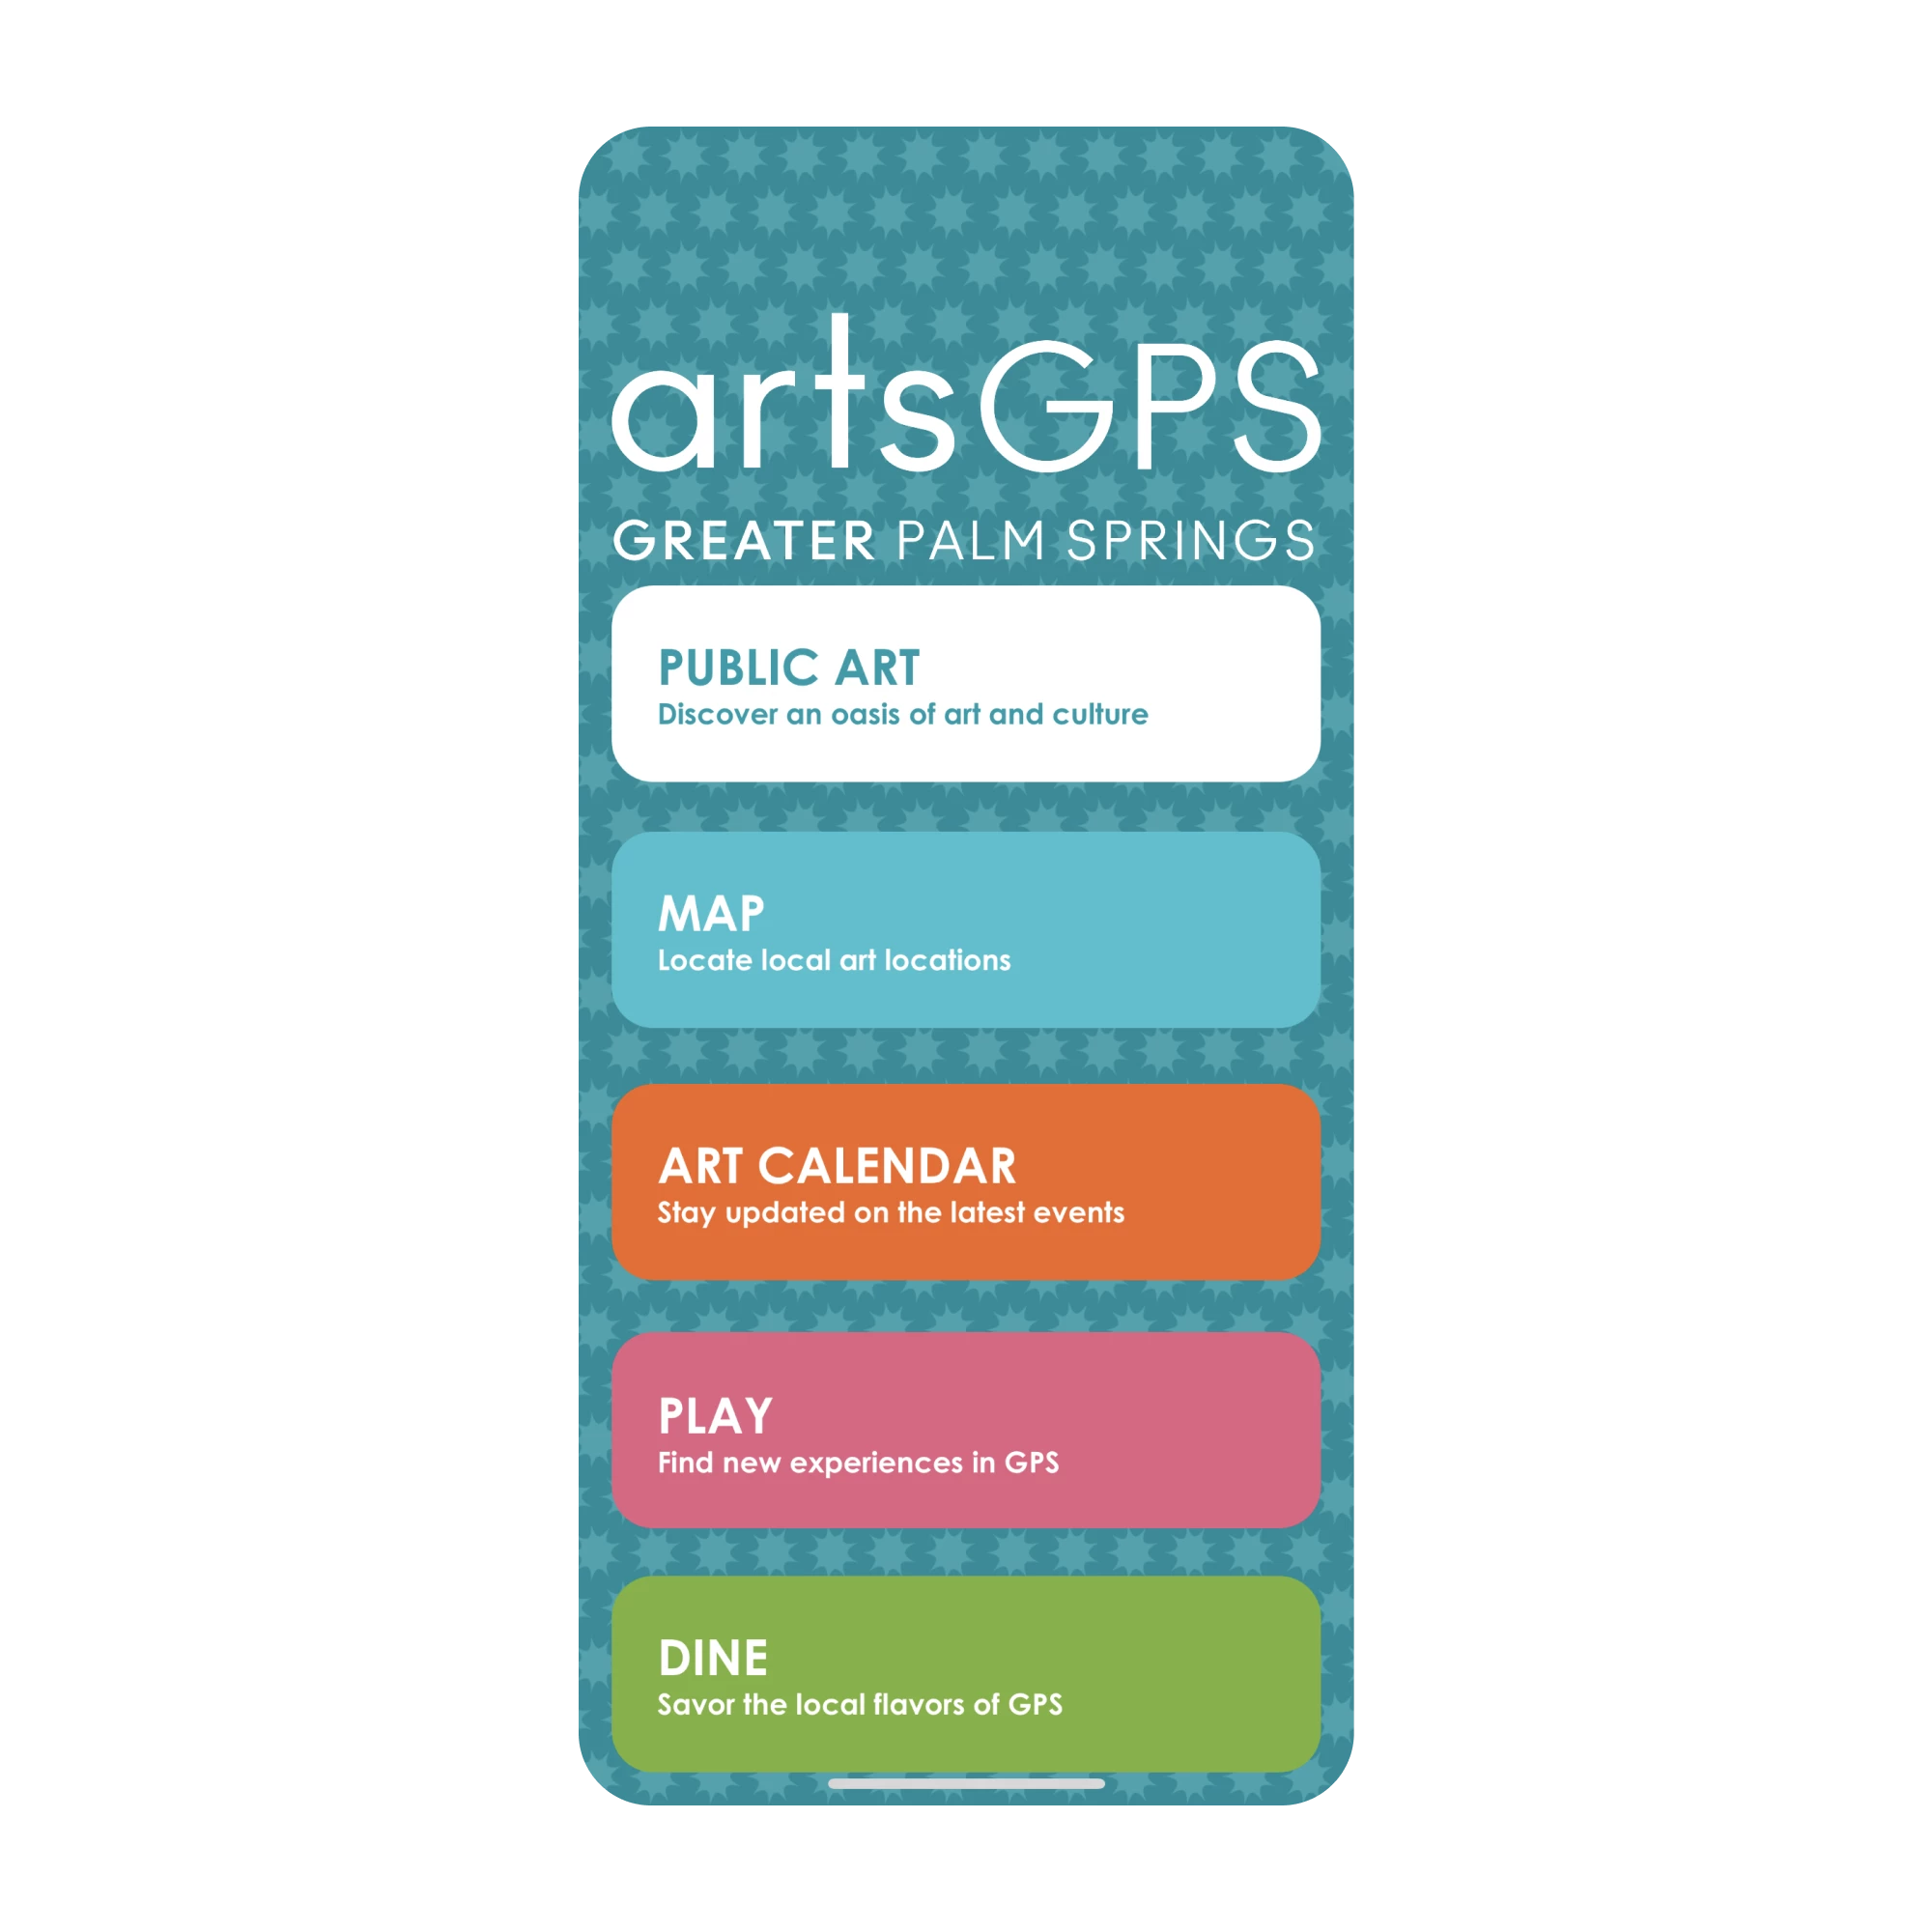 Homepage of the artsGPS mobile app